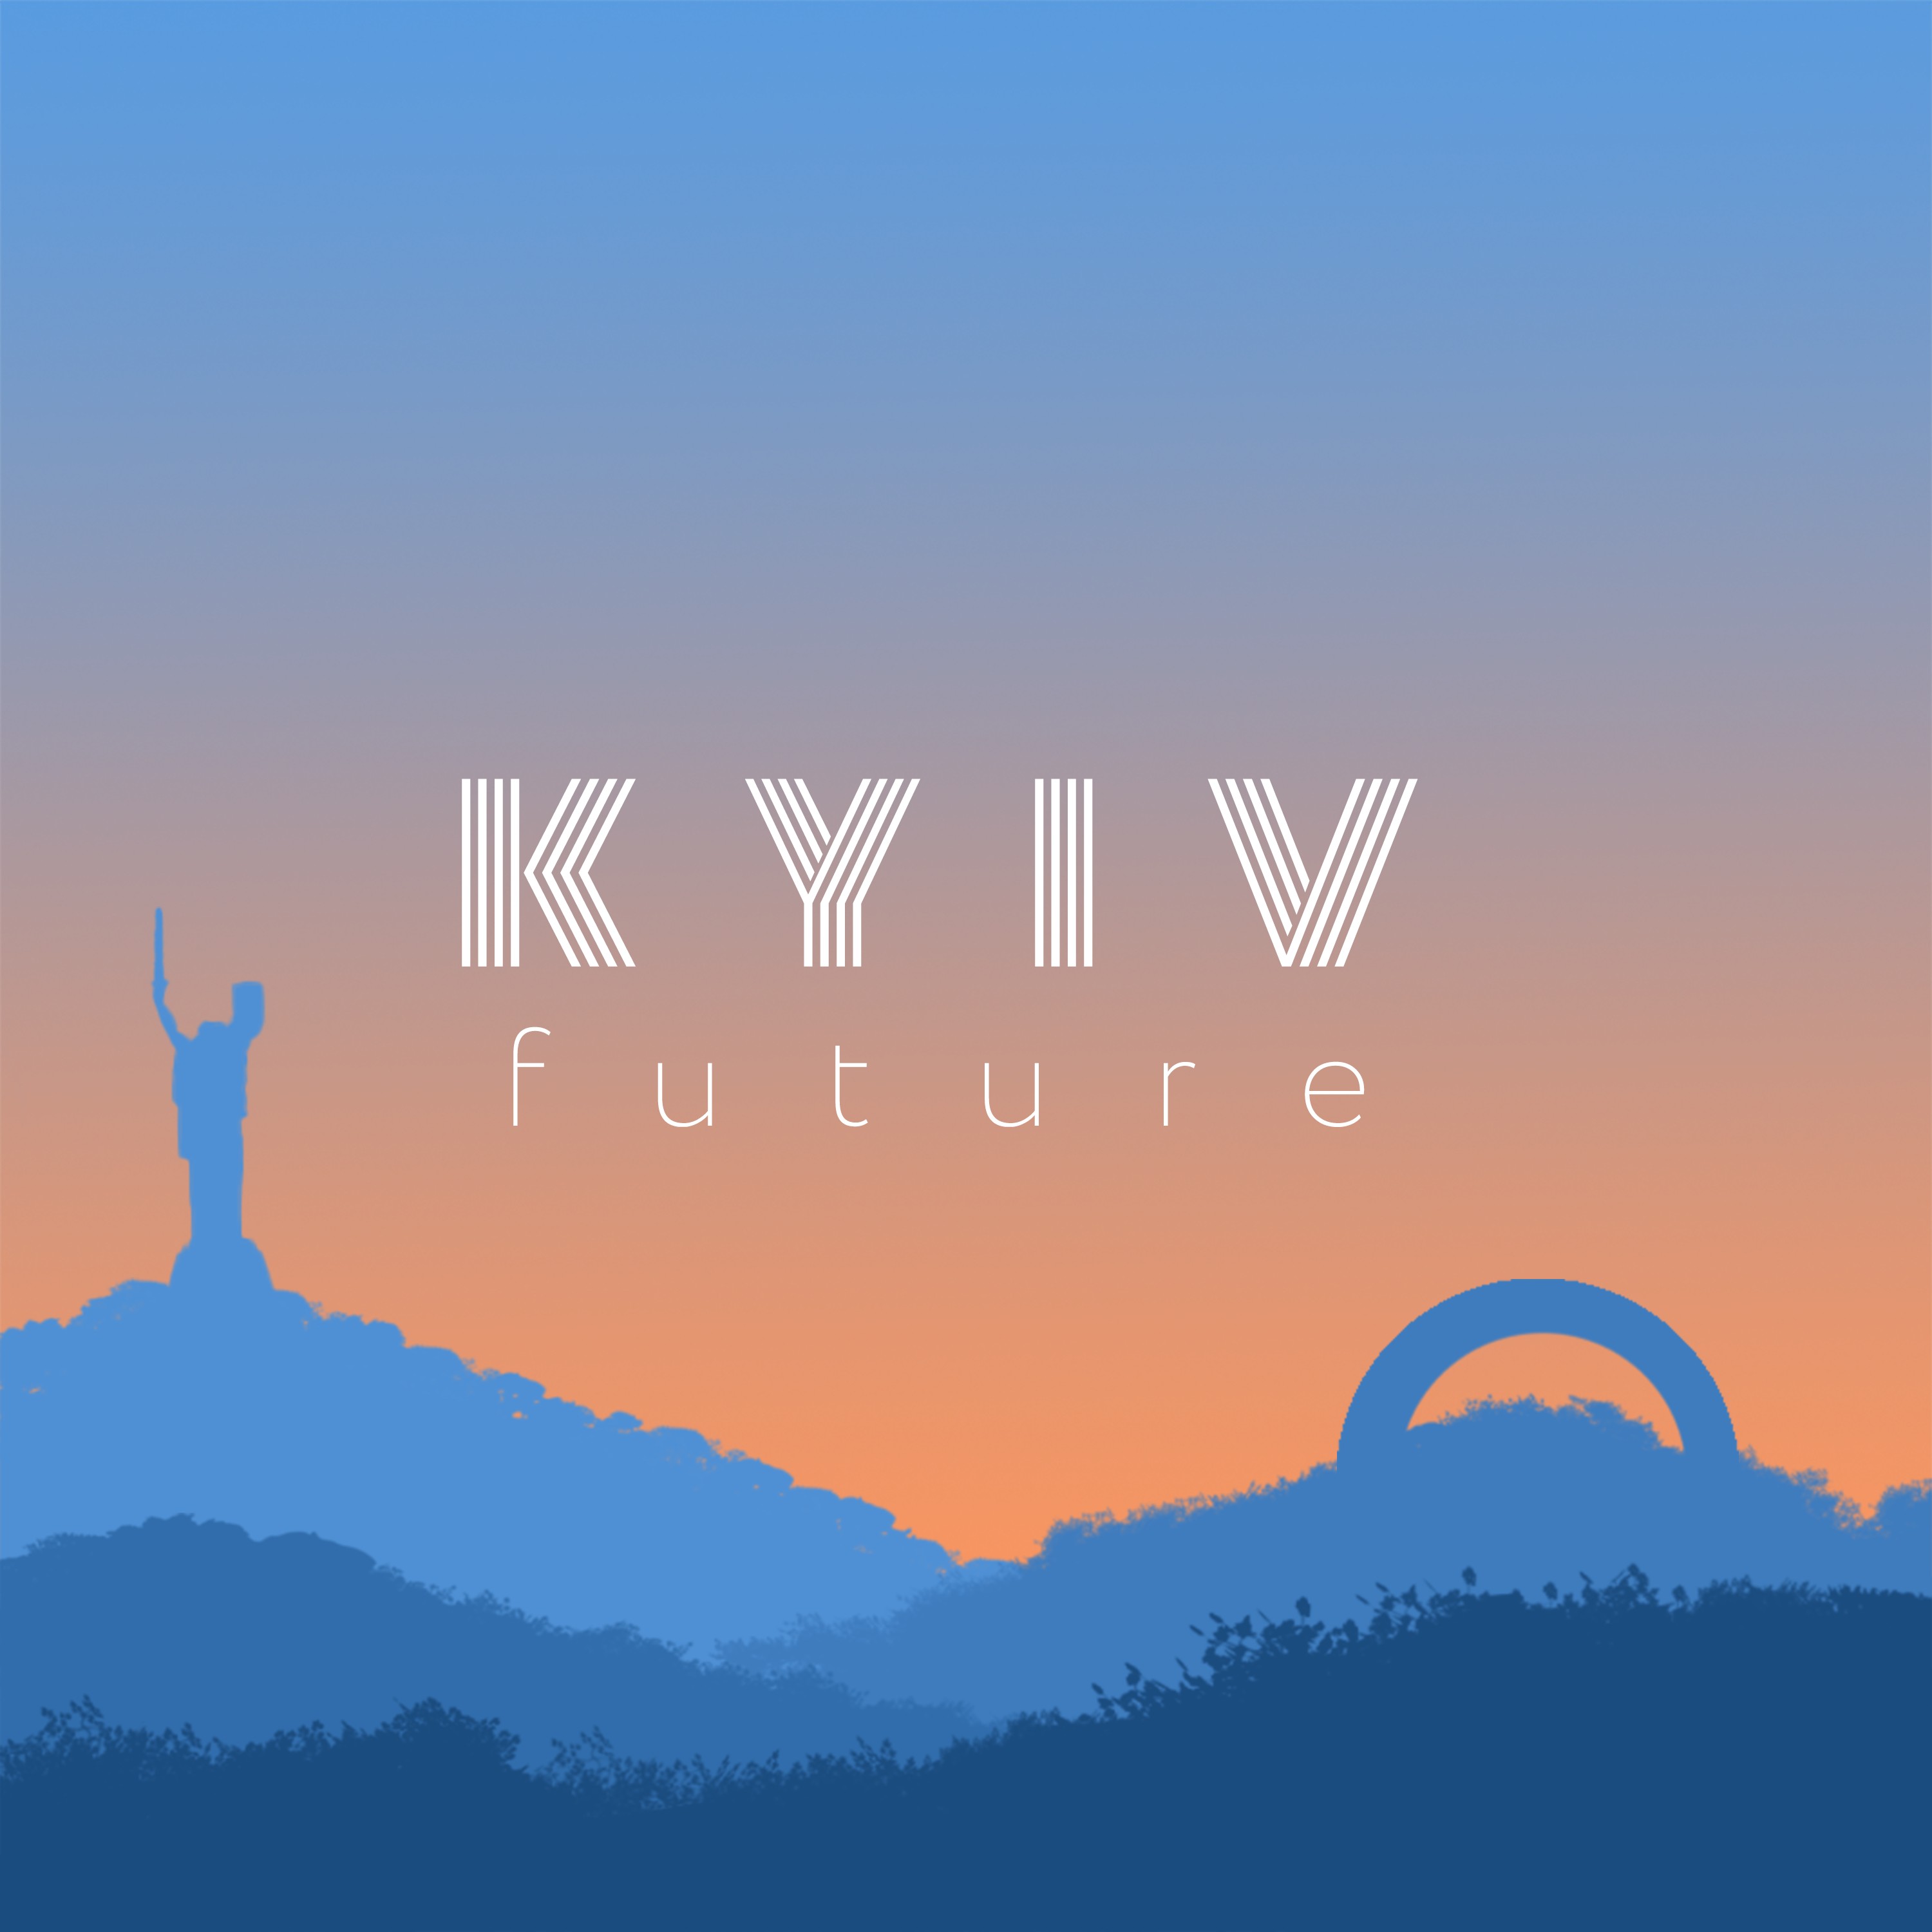 Kyiv Future